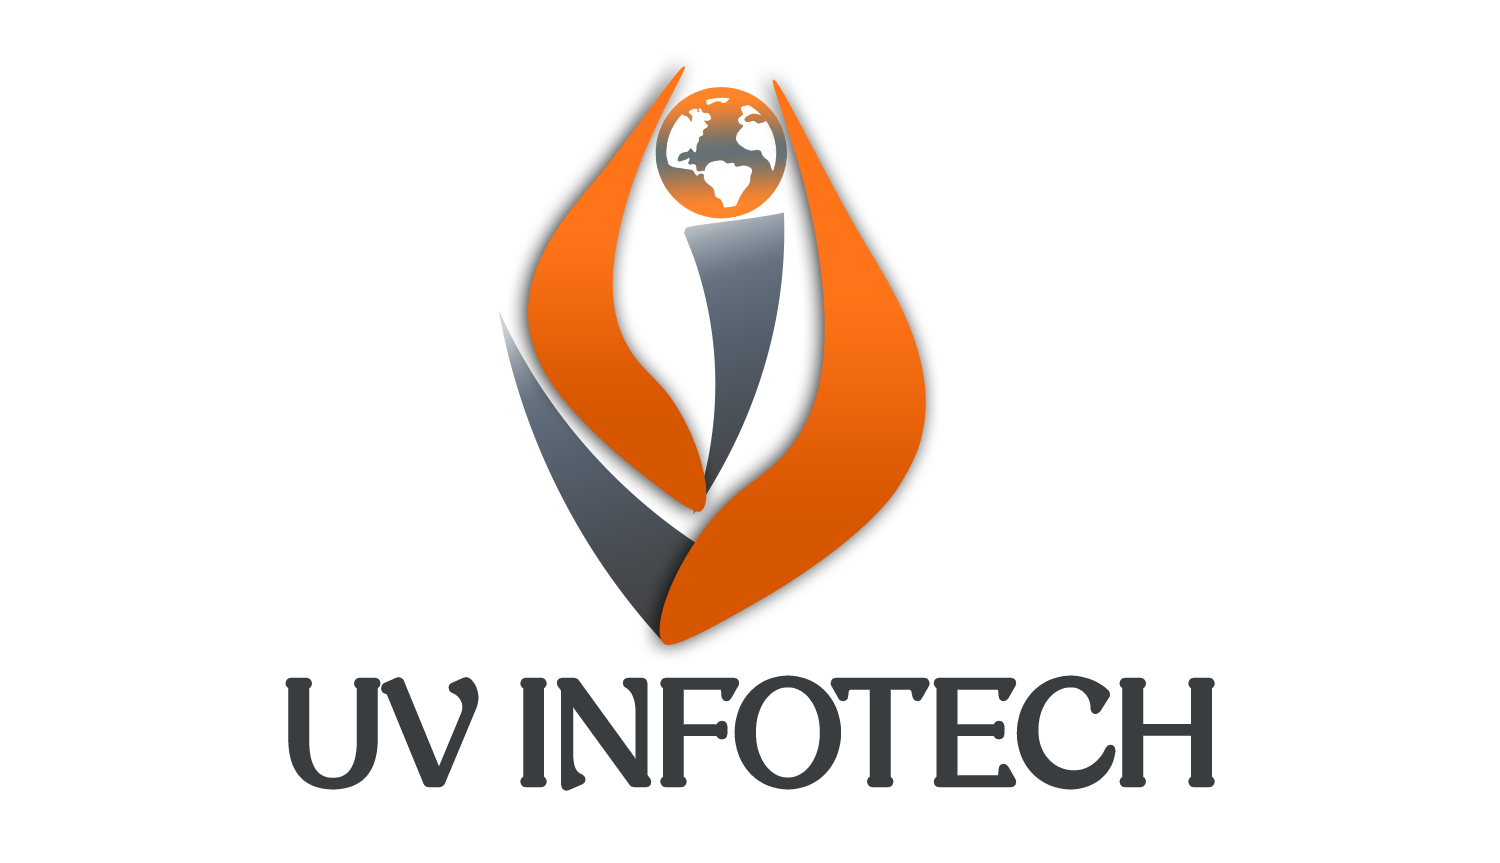 Uv Infotech